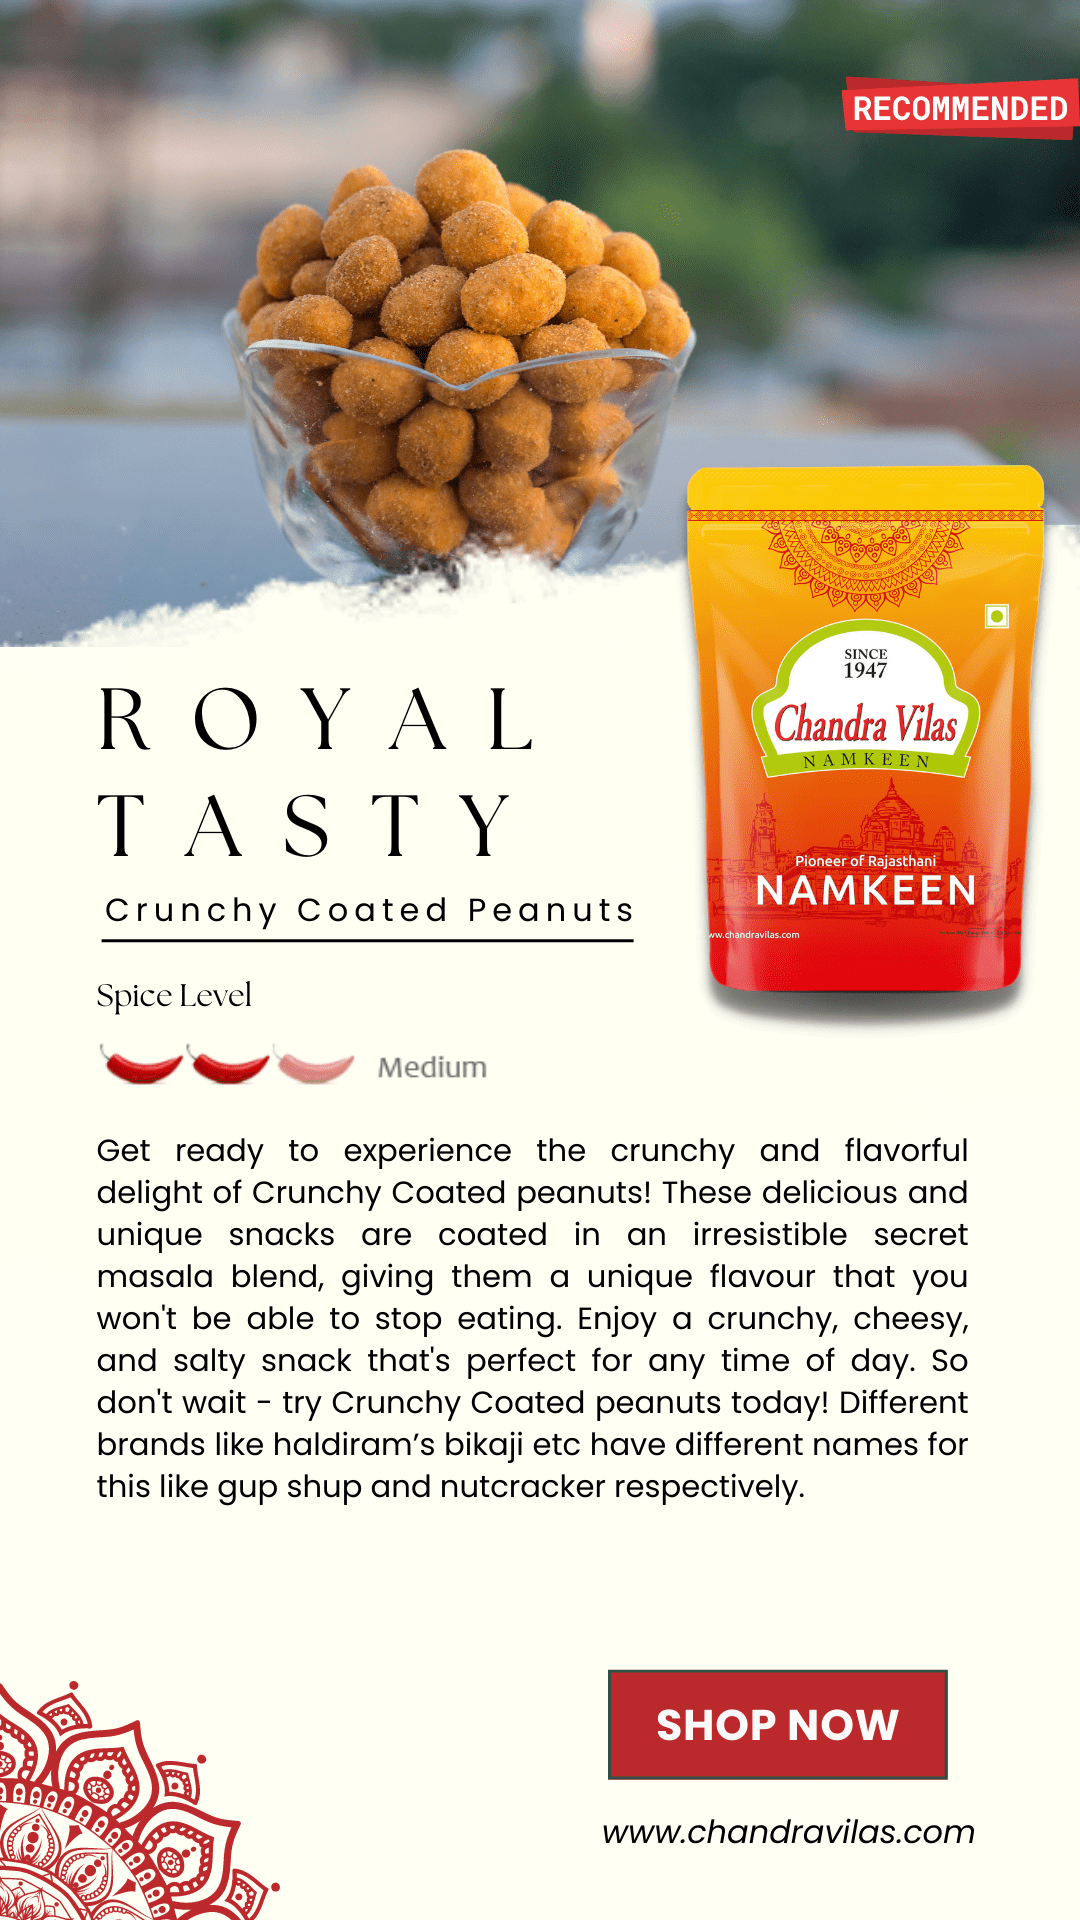 Royal Tasty